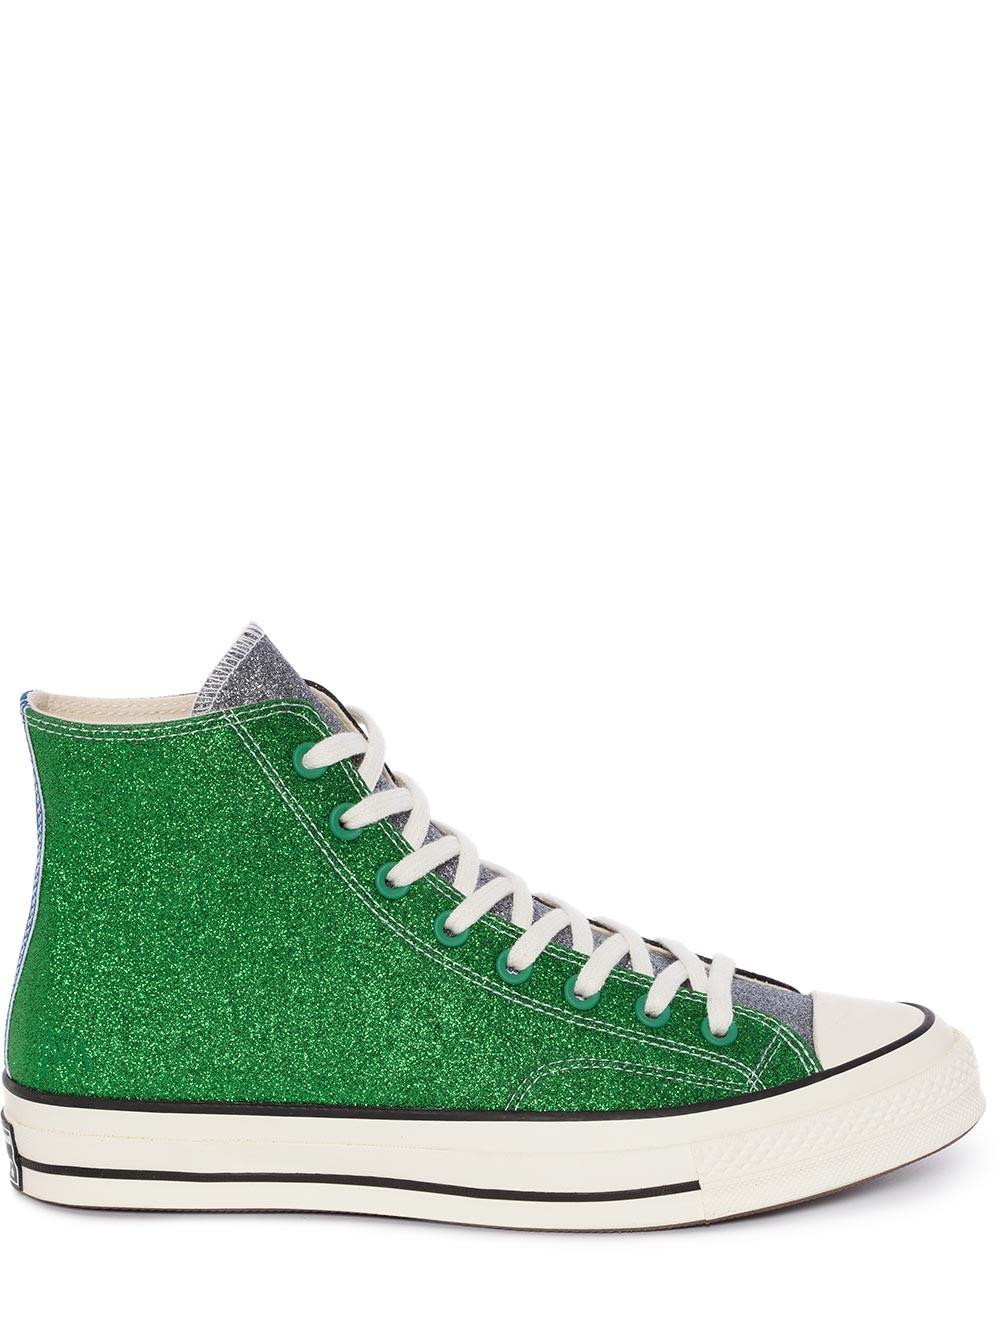 green glitter converse shoes